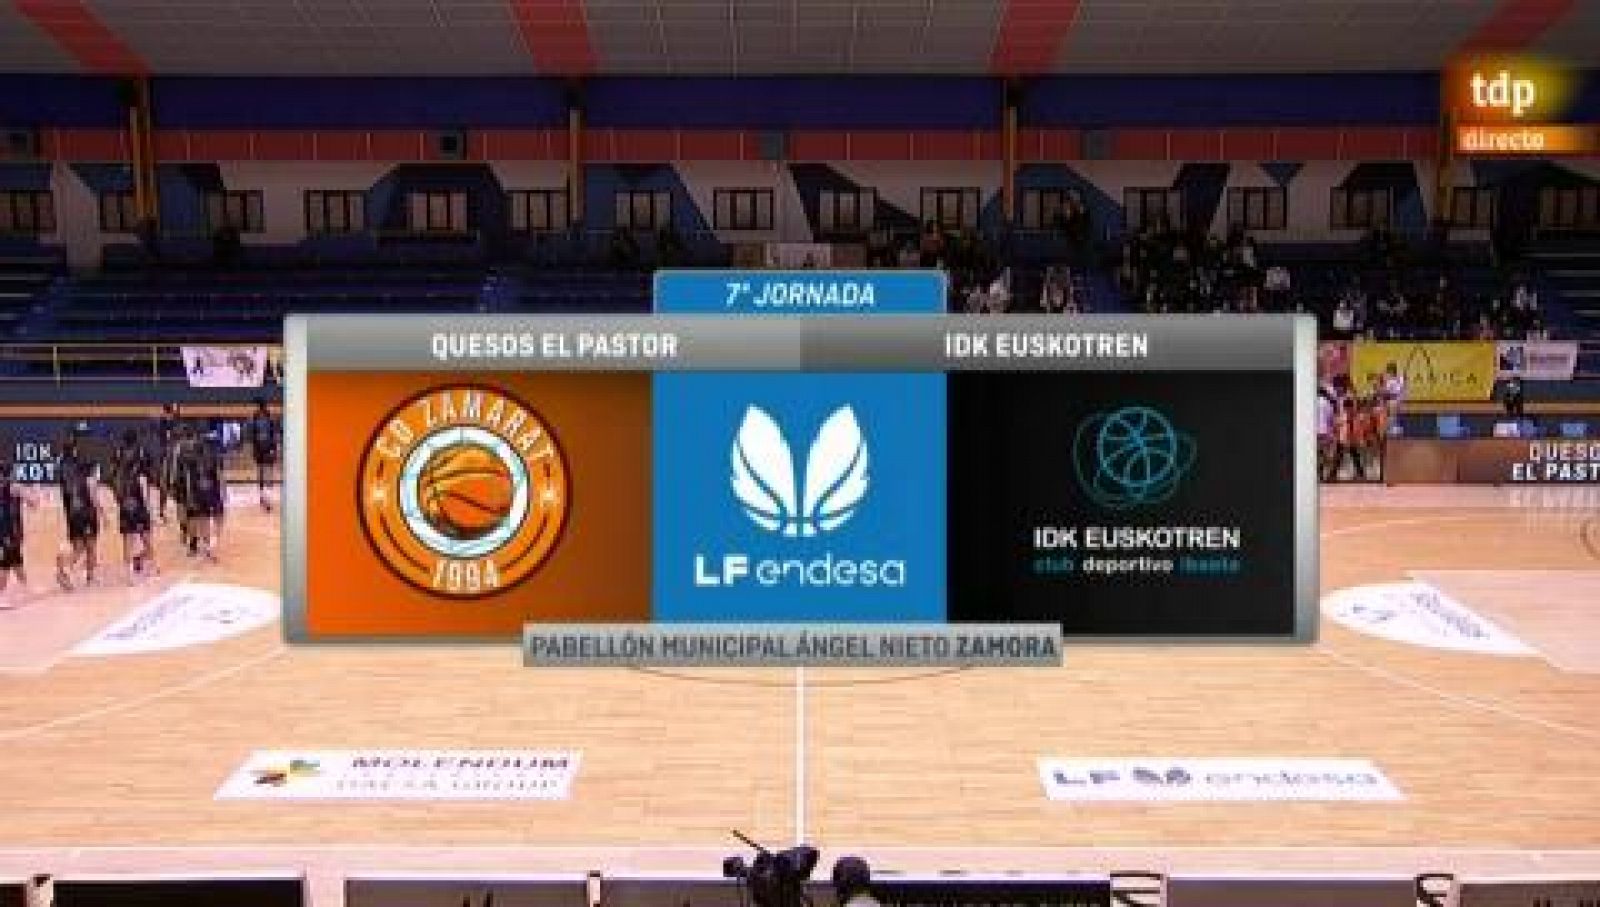 Baloncesto - Liga femenina Endesa. 7ª jornada: Quesos El Pastor - IDK Euskotren - RTVE.es